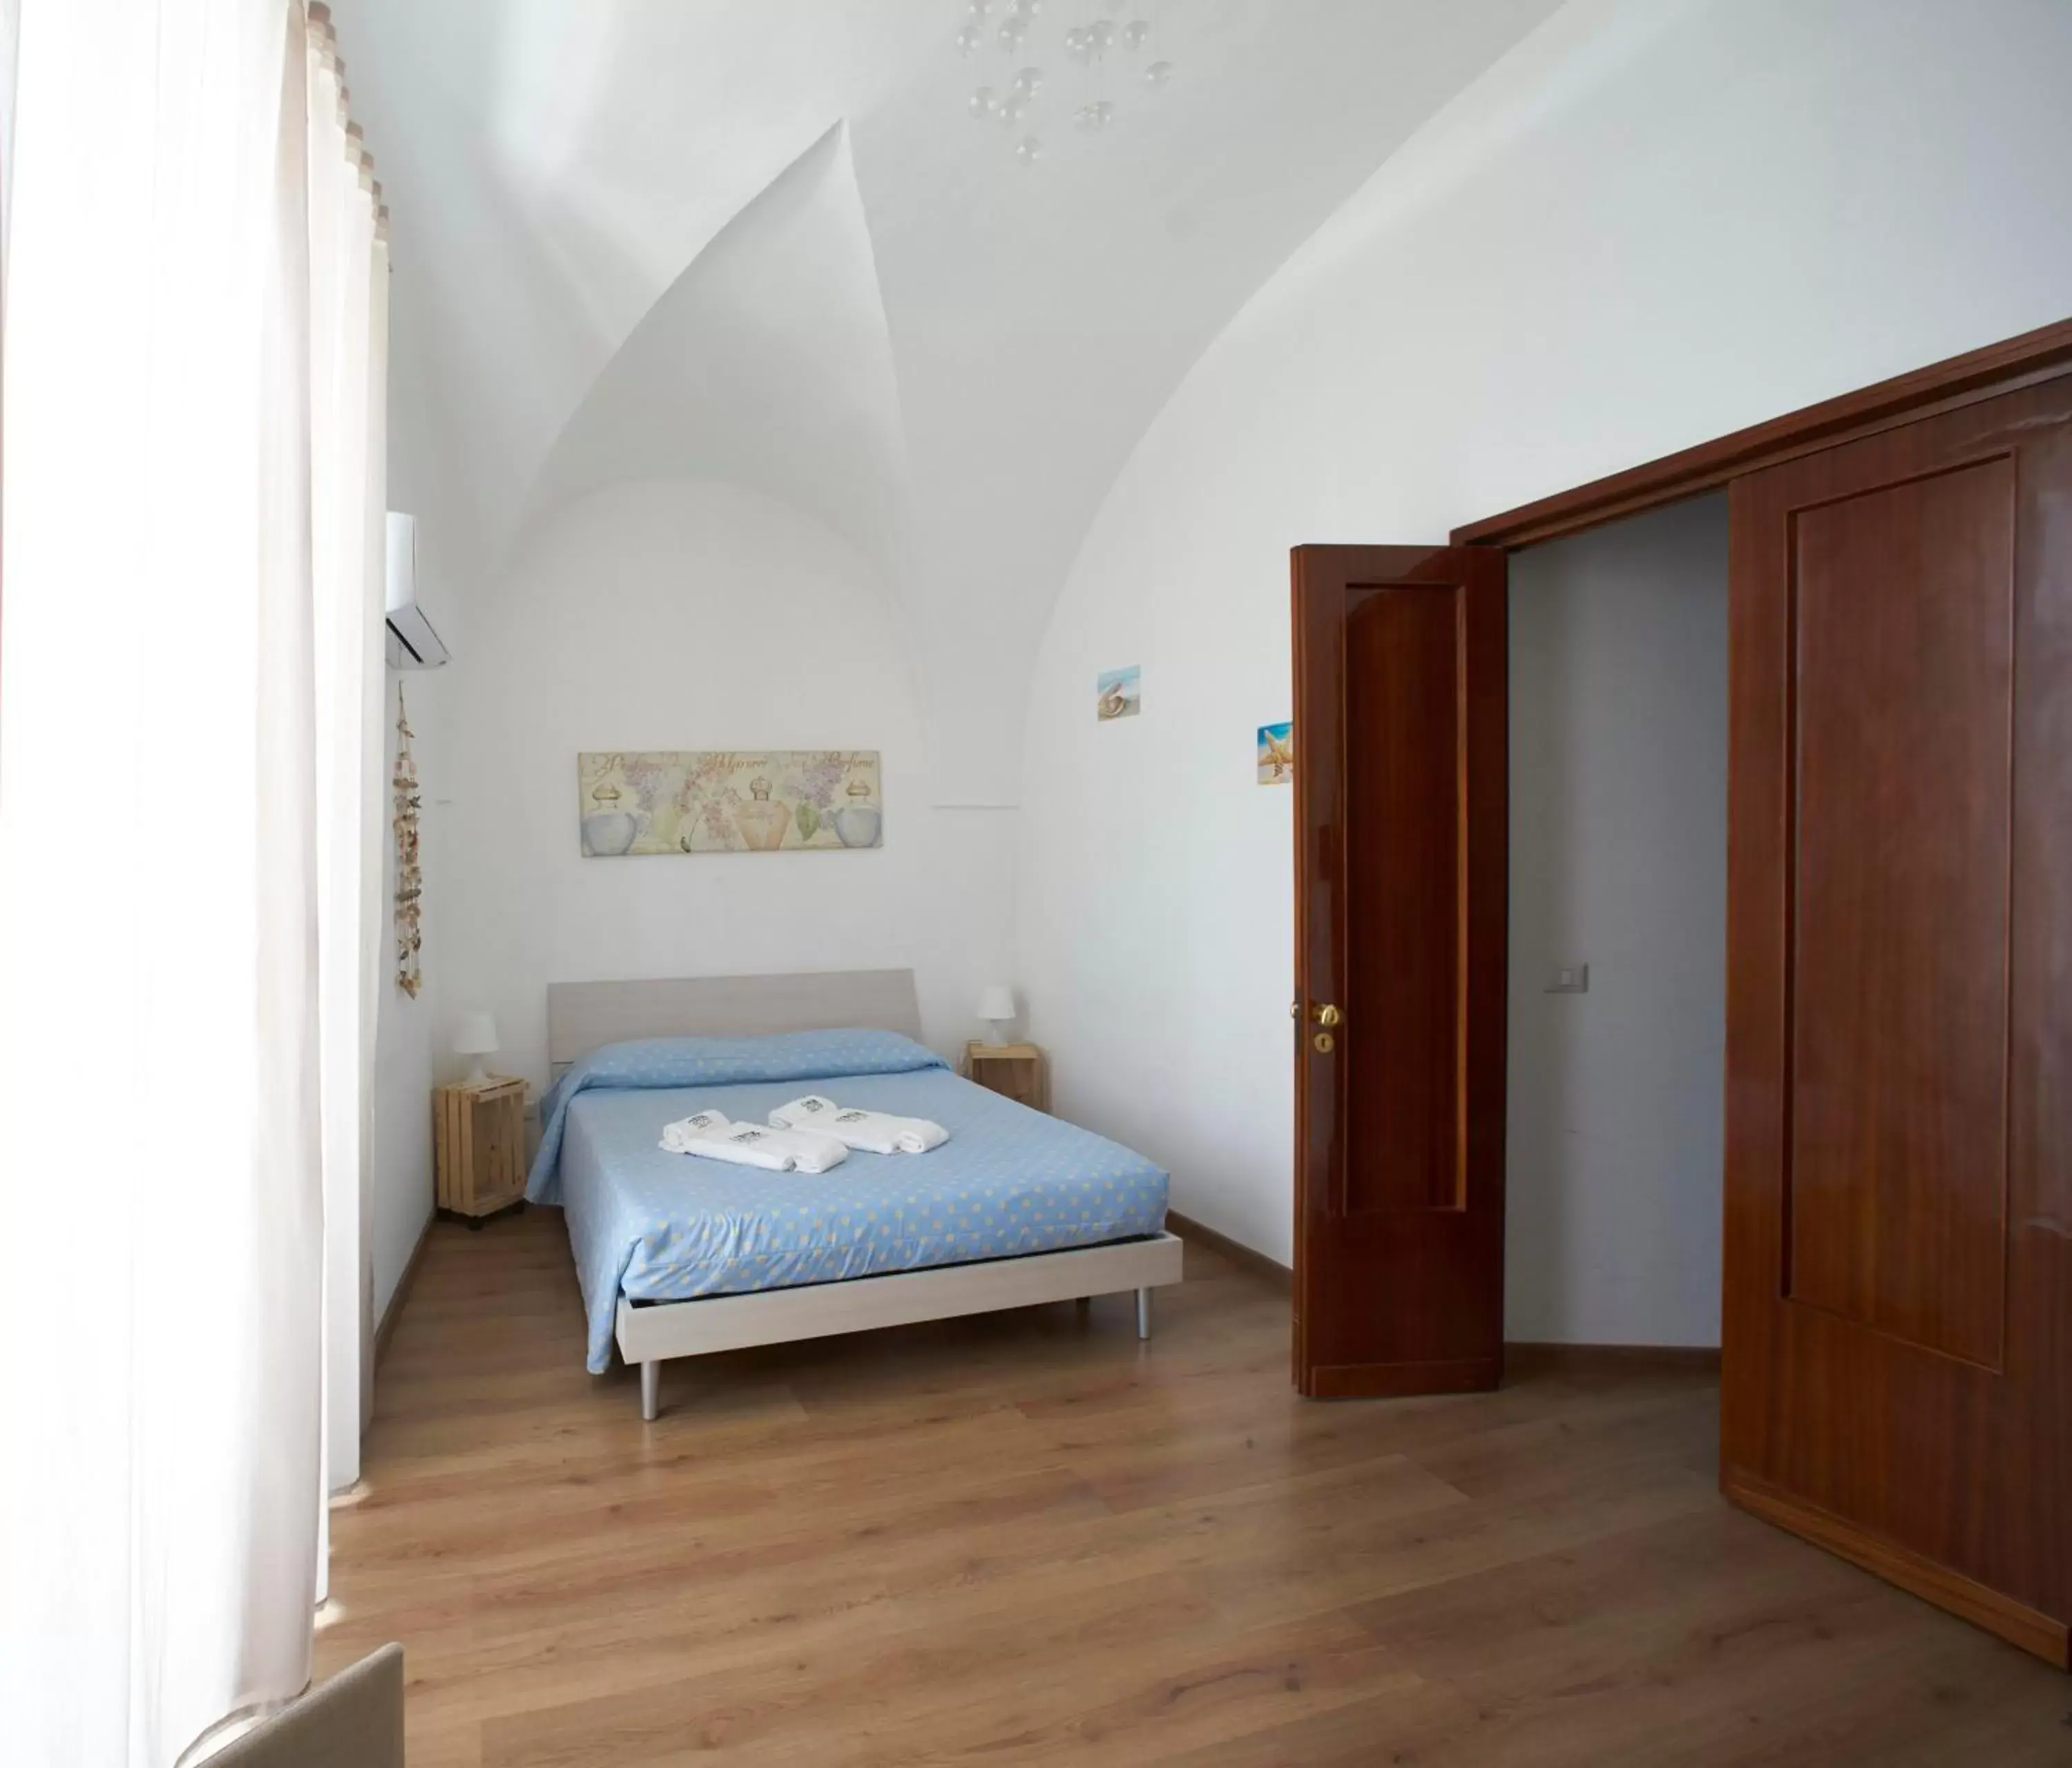 Photo of the whole room, Room Photo in B&B Favola Mediterranea